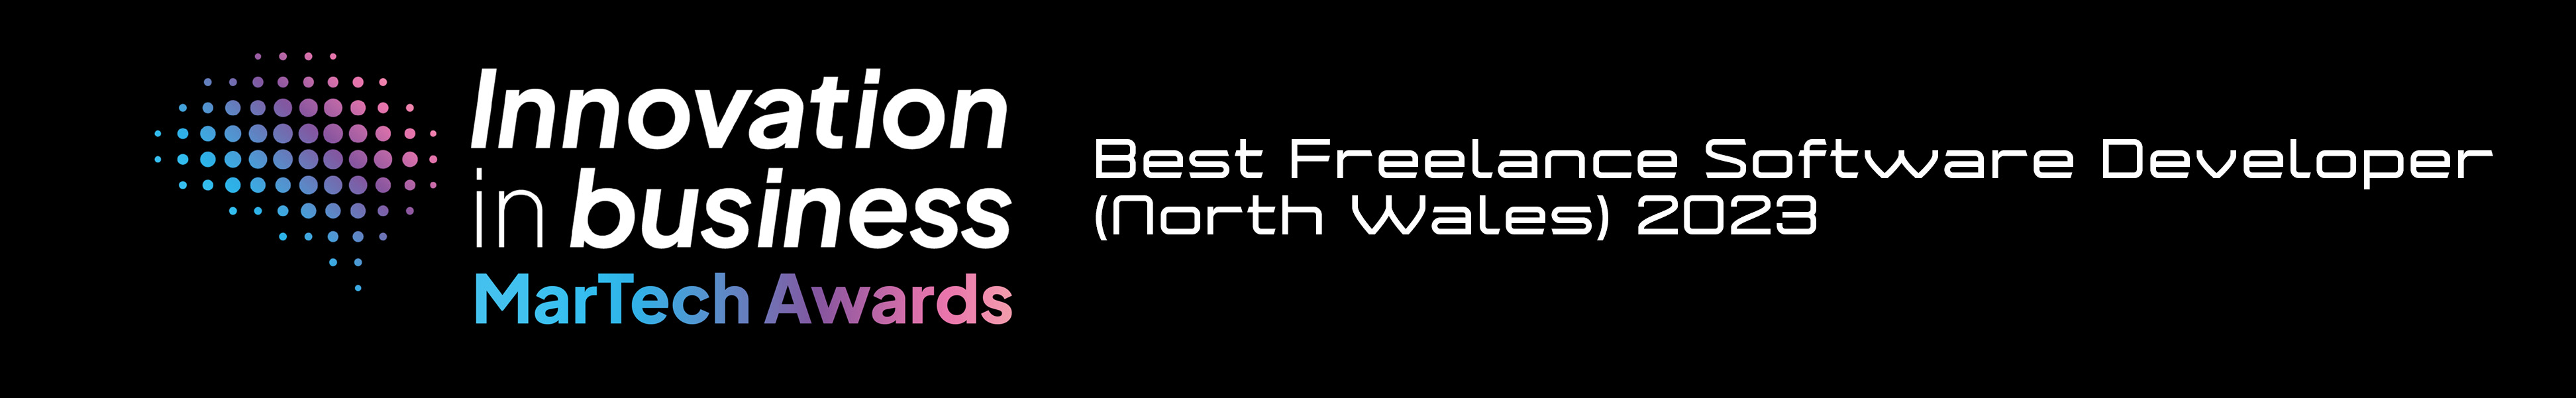 Best Freelance Software Developer (North Wales) 2023